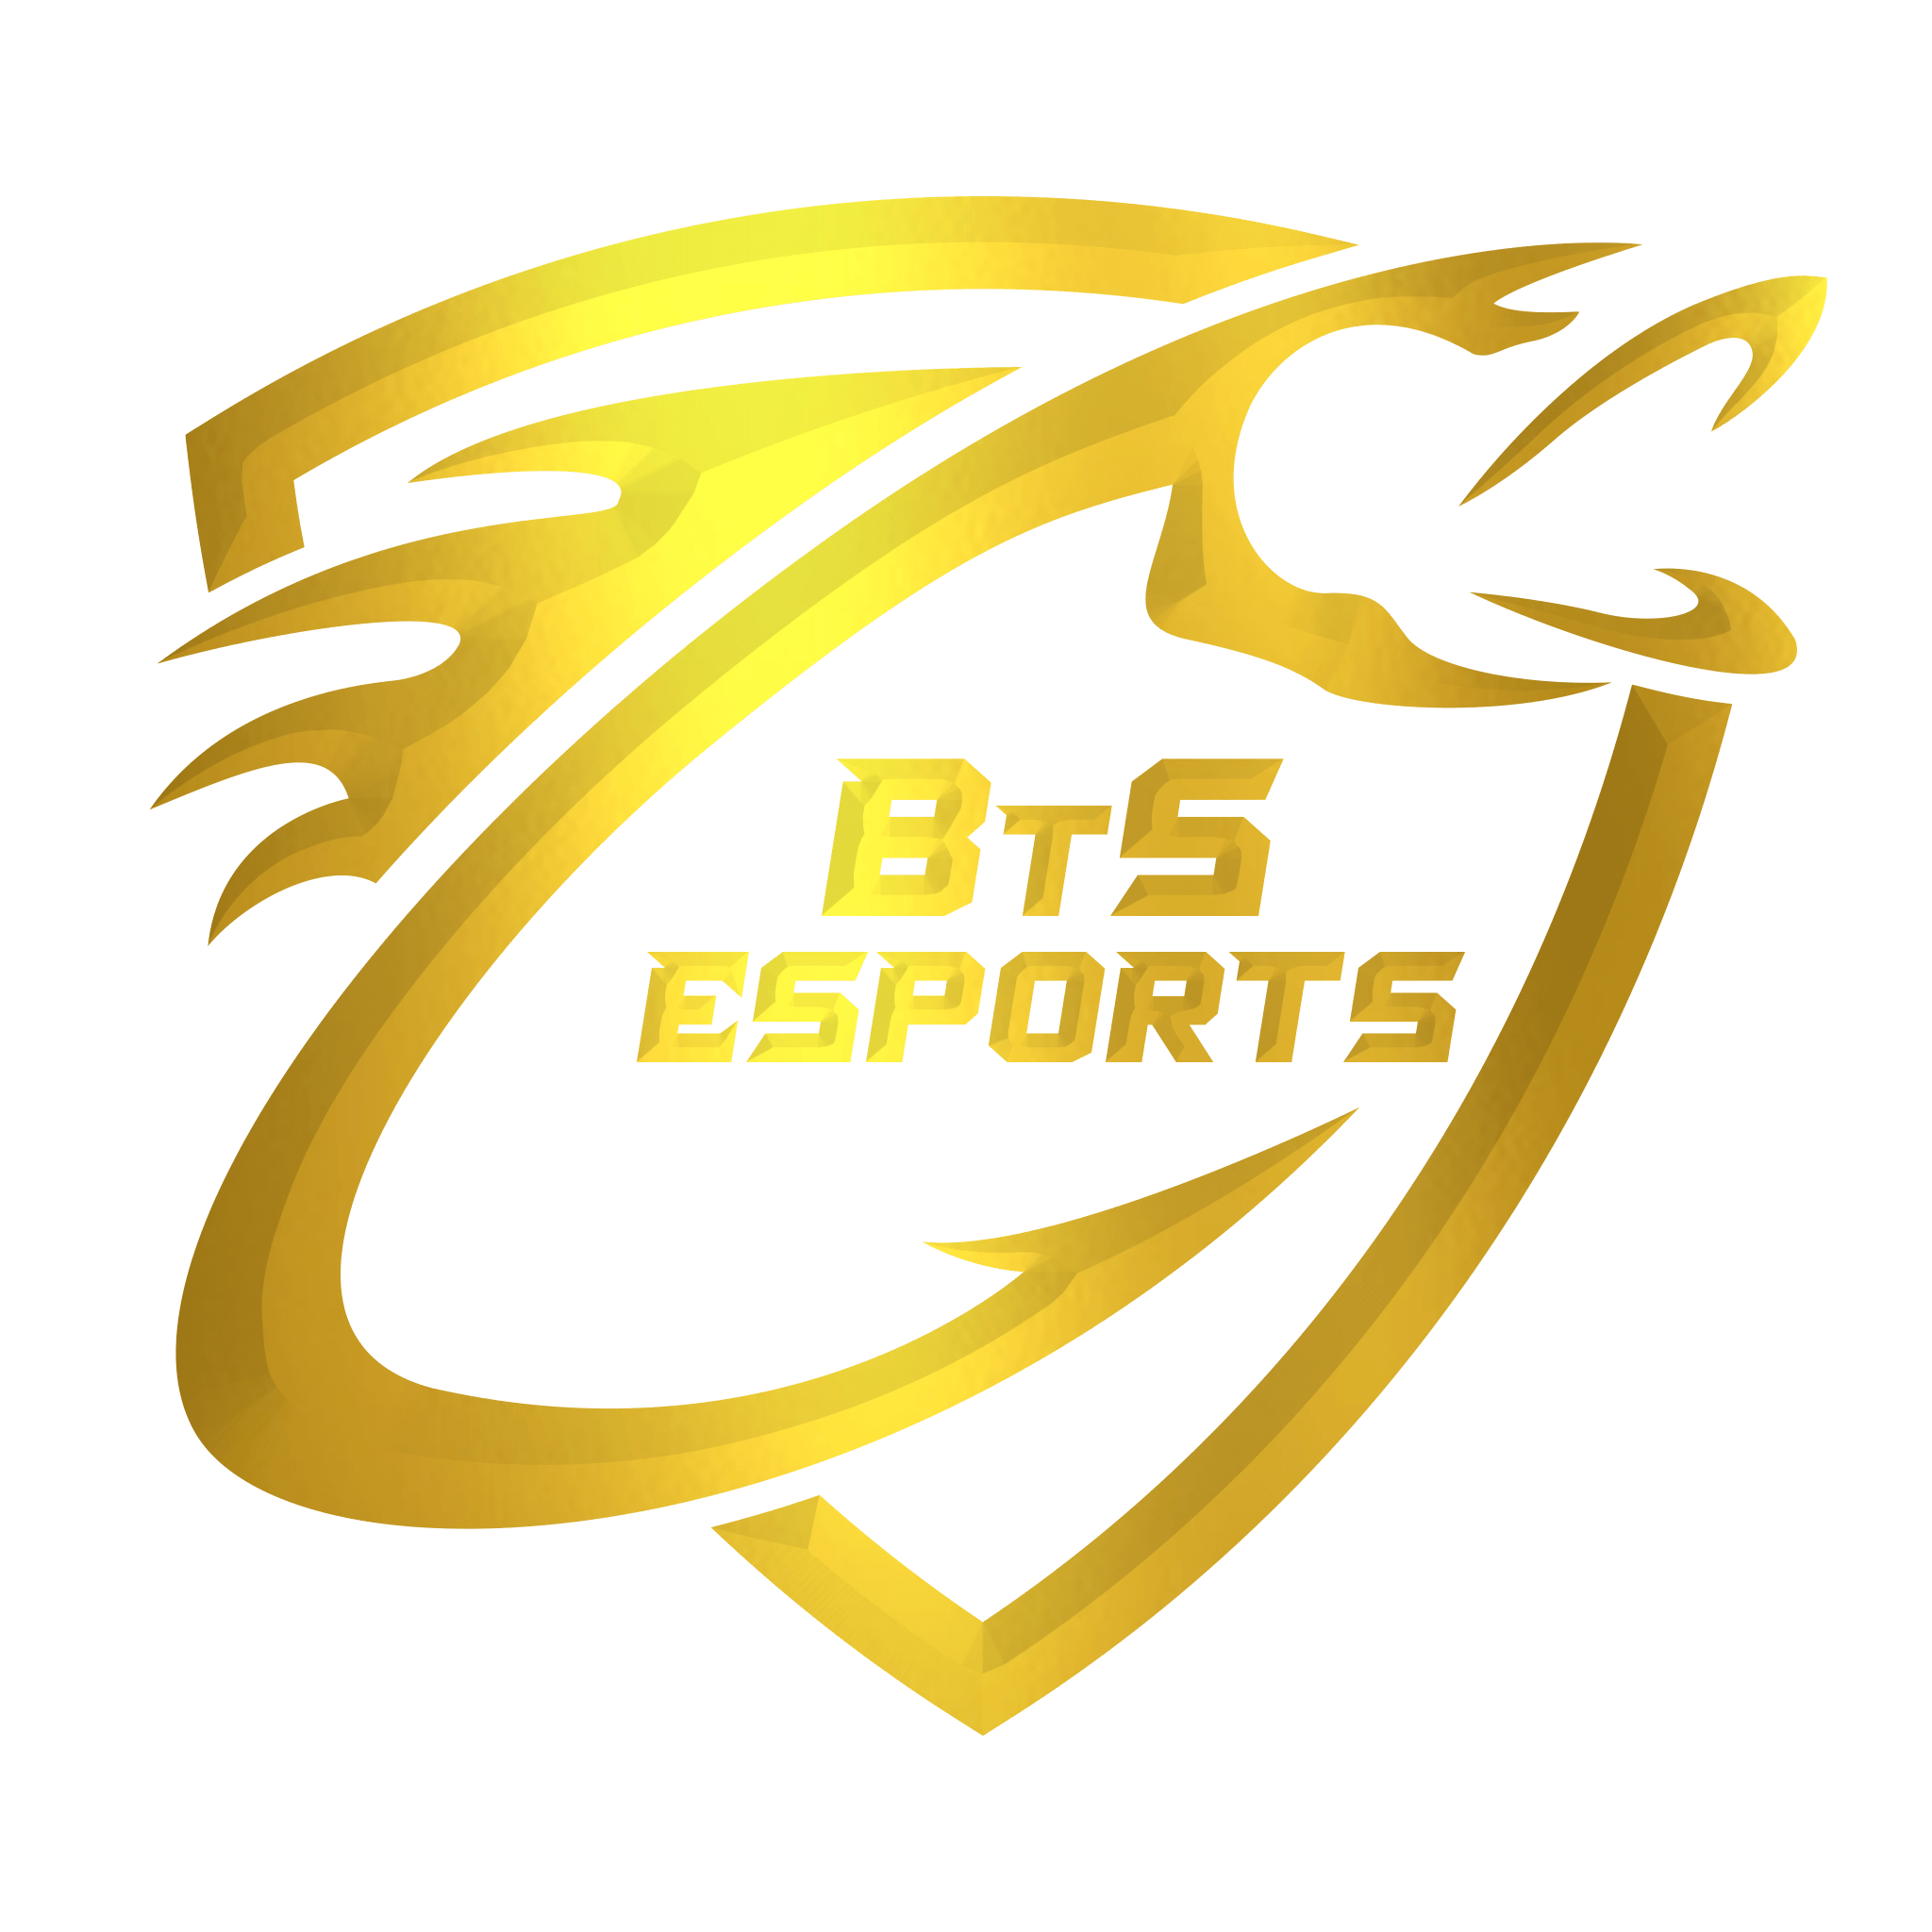 BtS Esports